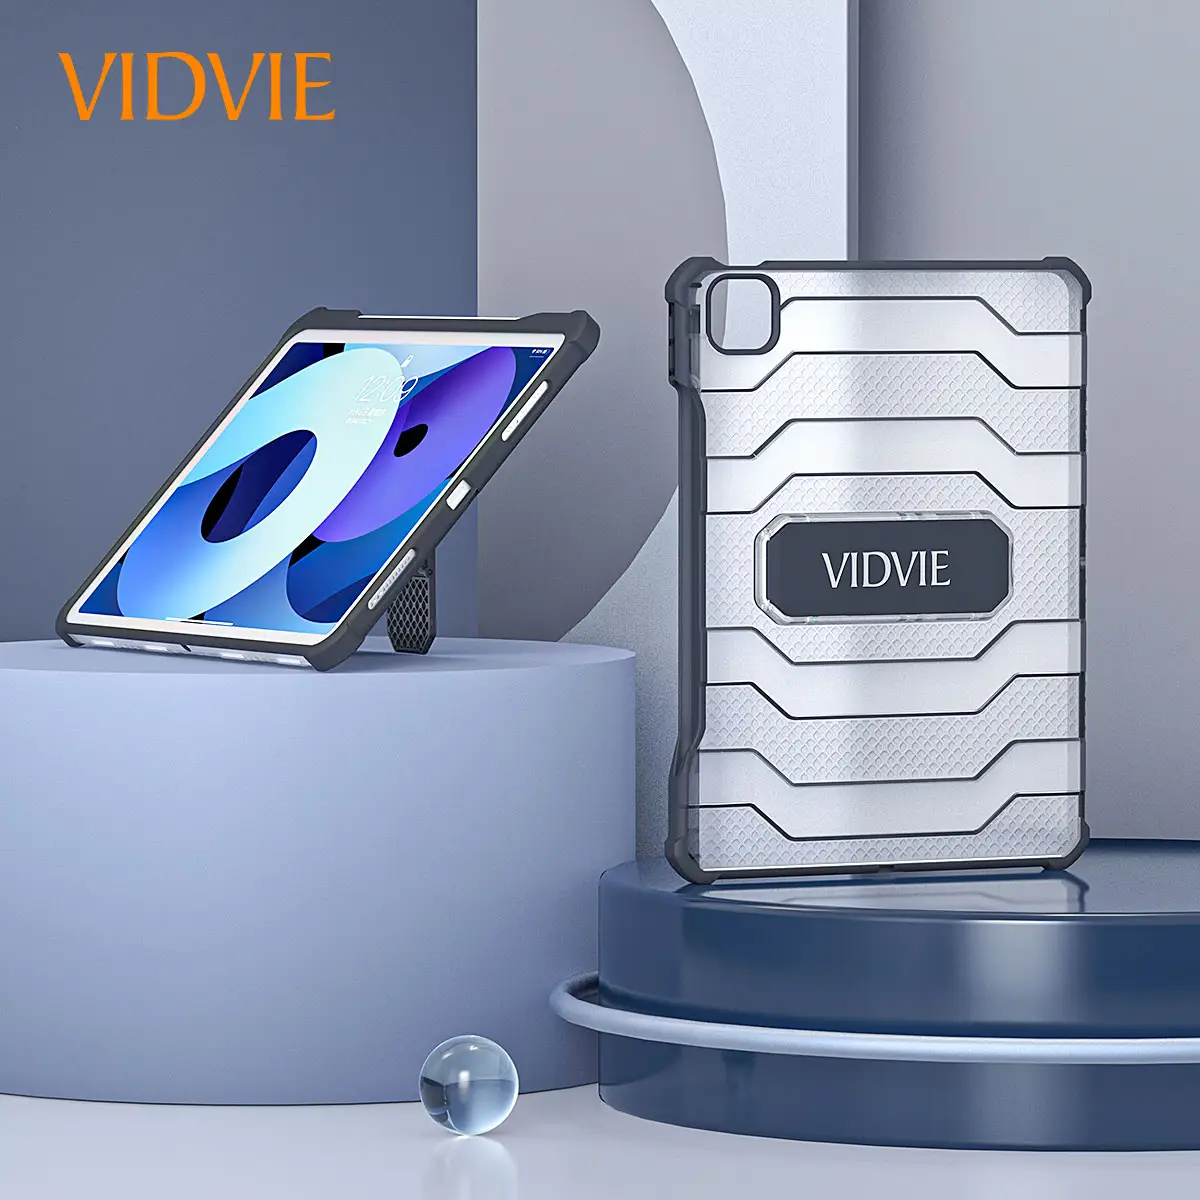 VIDVIE kompakt TPU PC şeffaf darbeye ped kılıfı kalem yuvası iPad hava Pro Mini